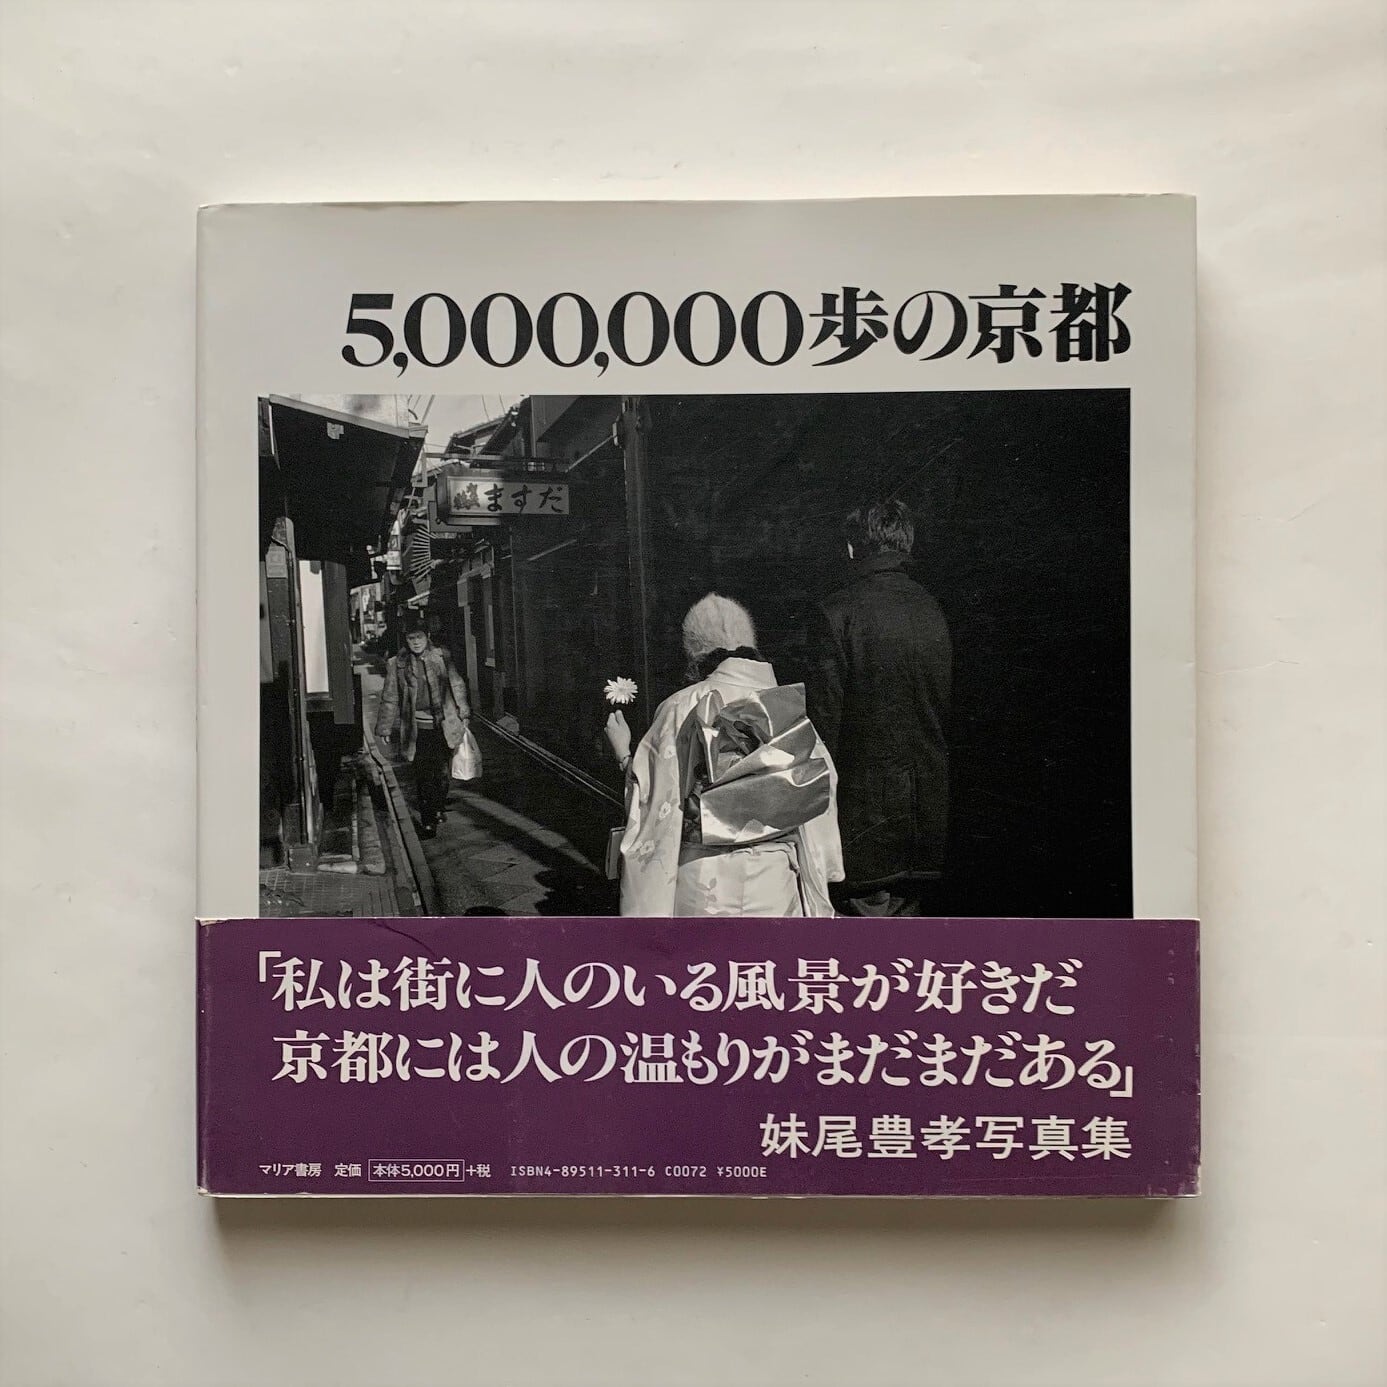 5,000,000歩の京都 / 妹尾 豊孝